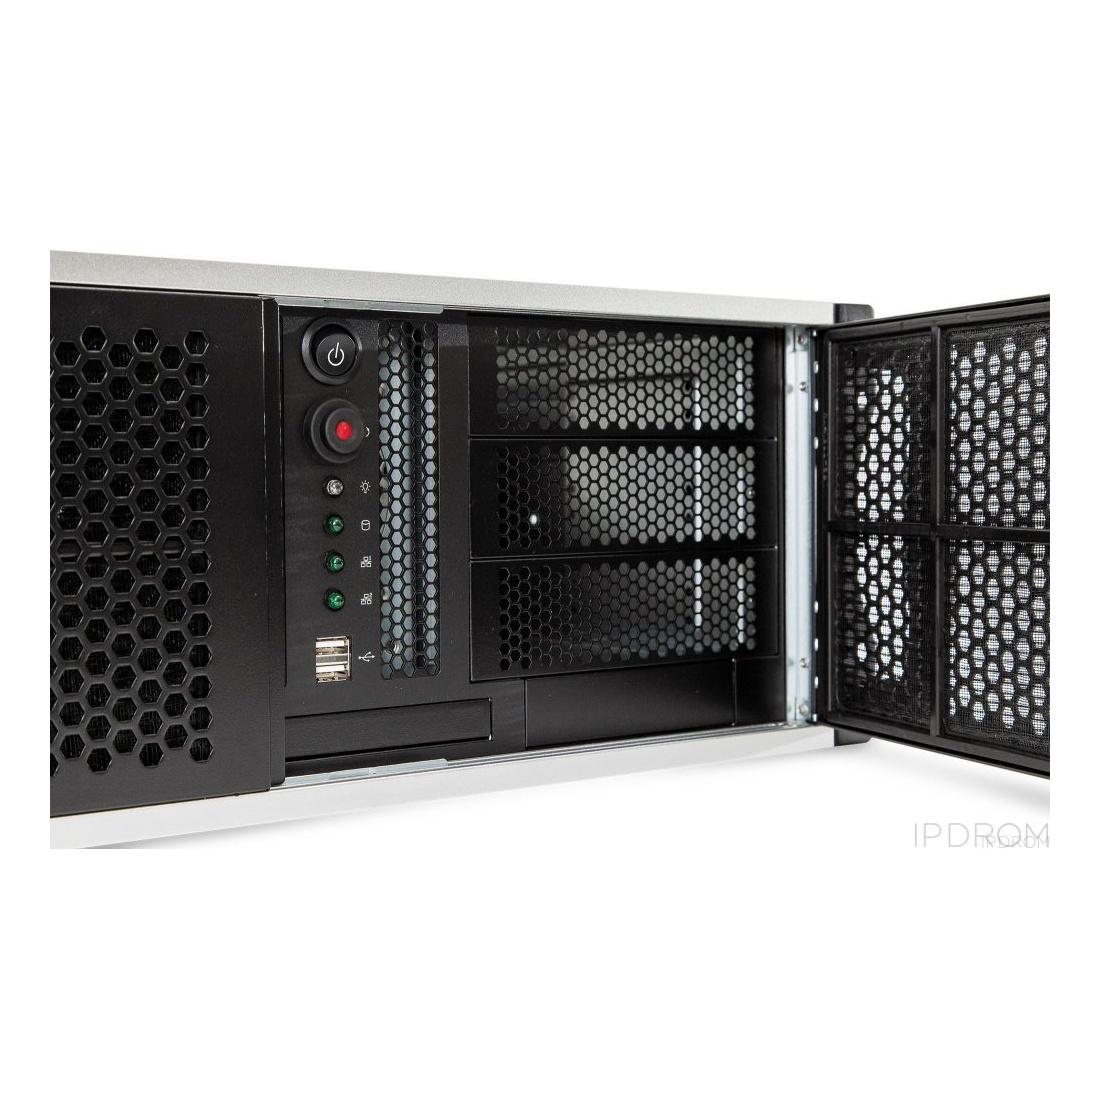 Сервер IPDROM Pro (P-16-РД-Б-12/БР-2Э) 2022